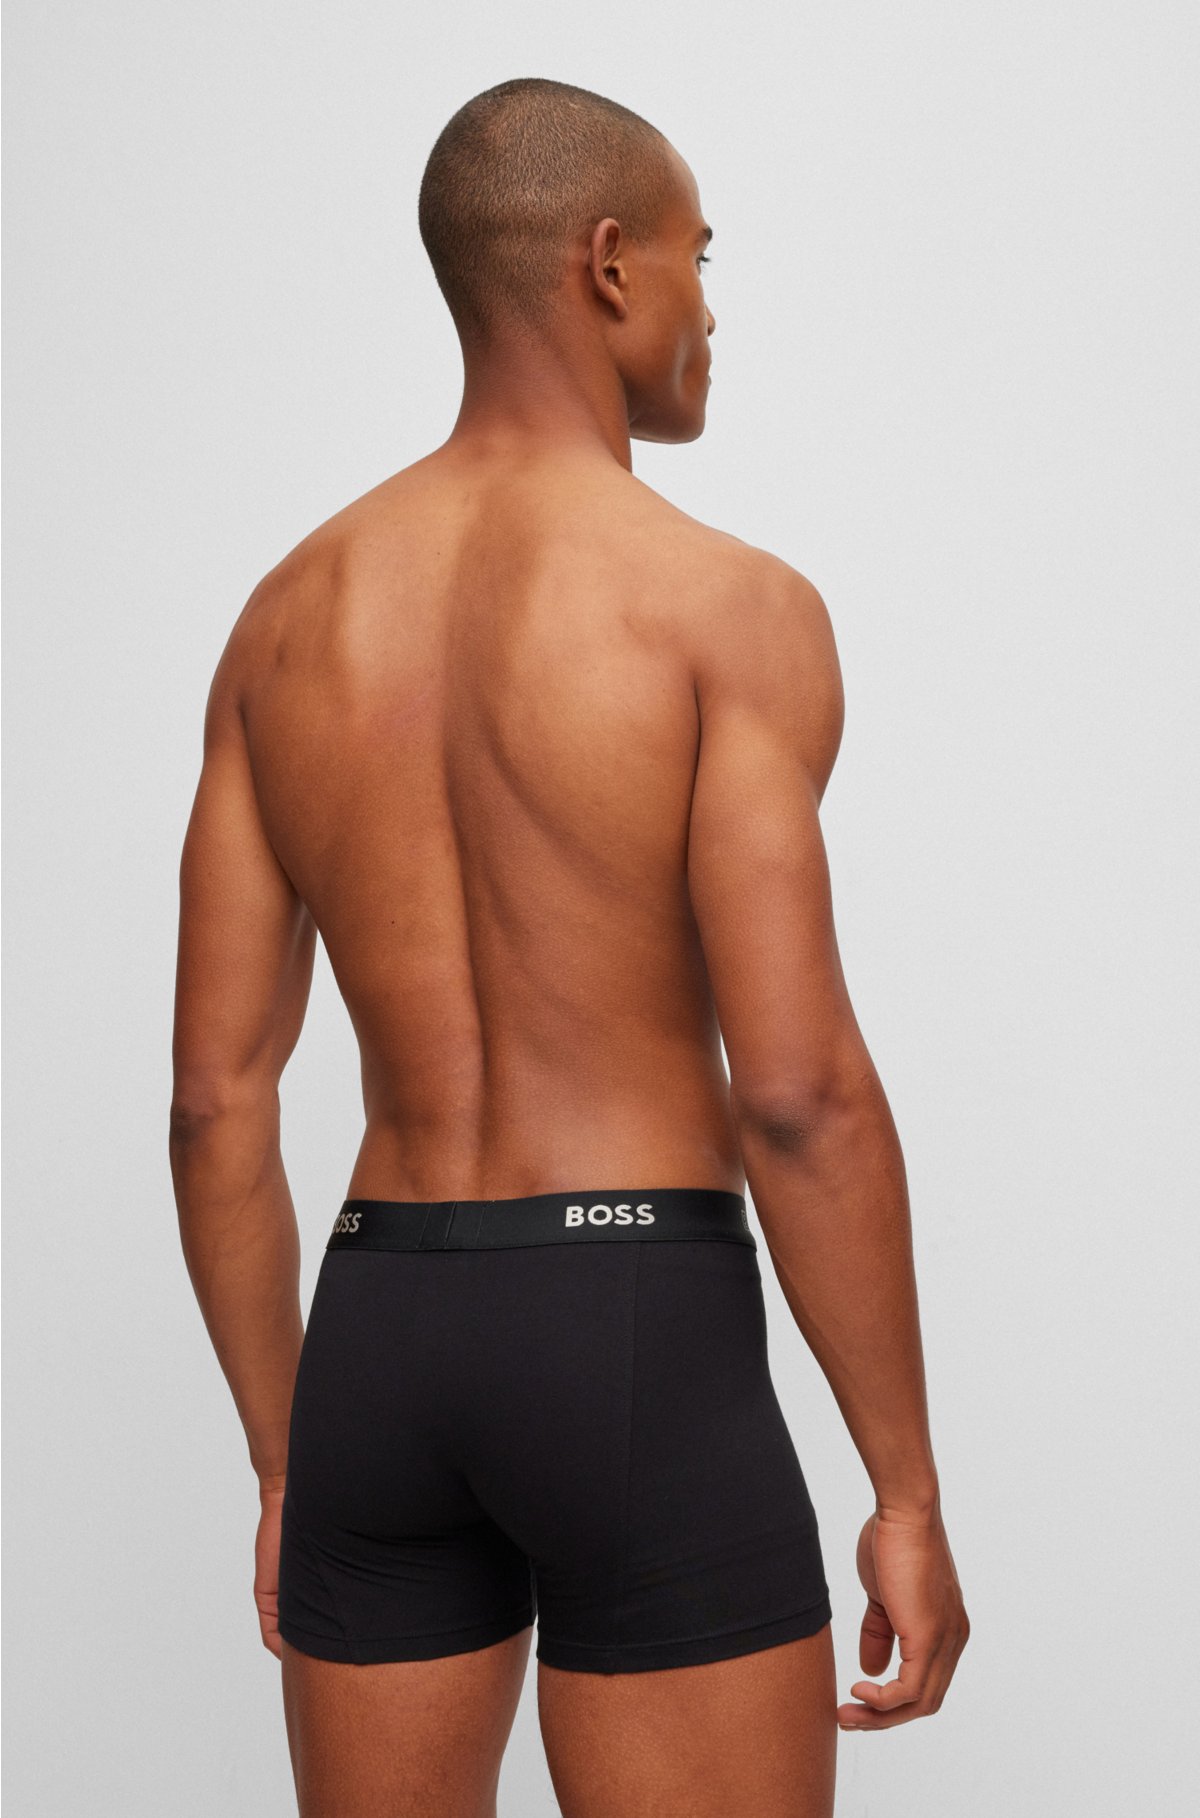 NBA Logo Waistband Athletic Mesh Black White Boxer Brief Underwear Mens S M  L XL